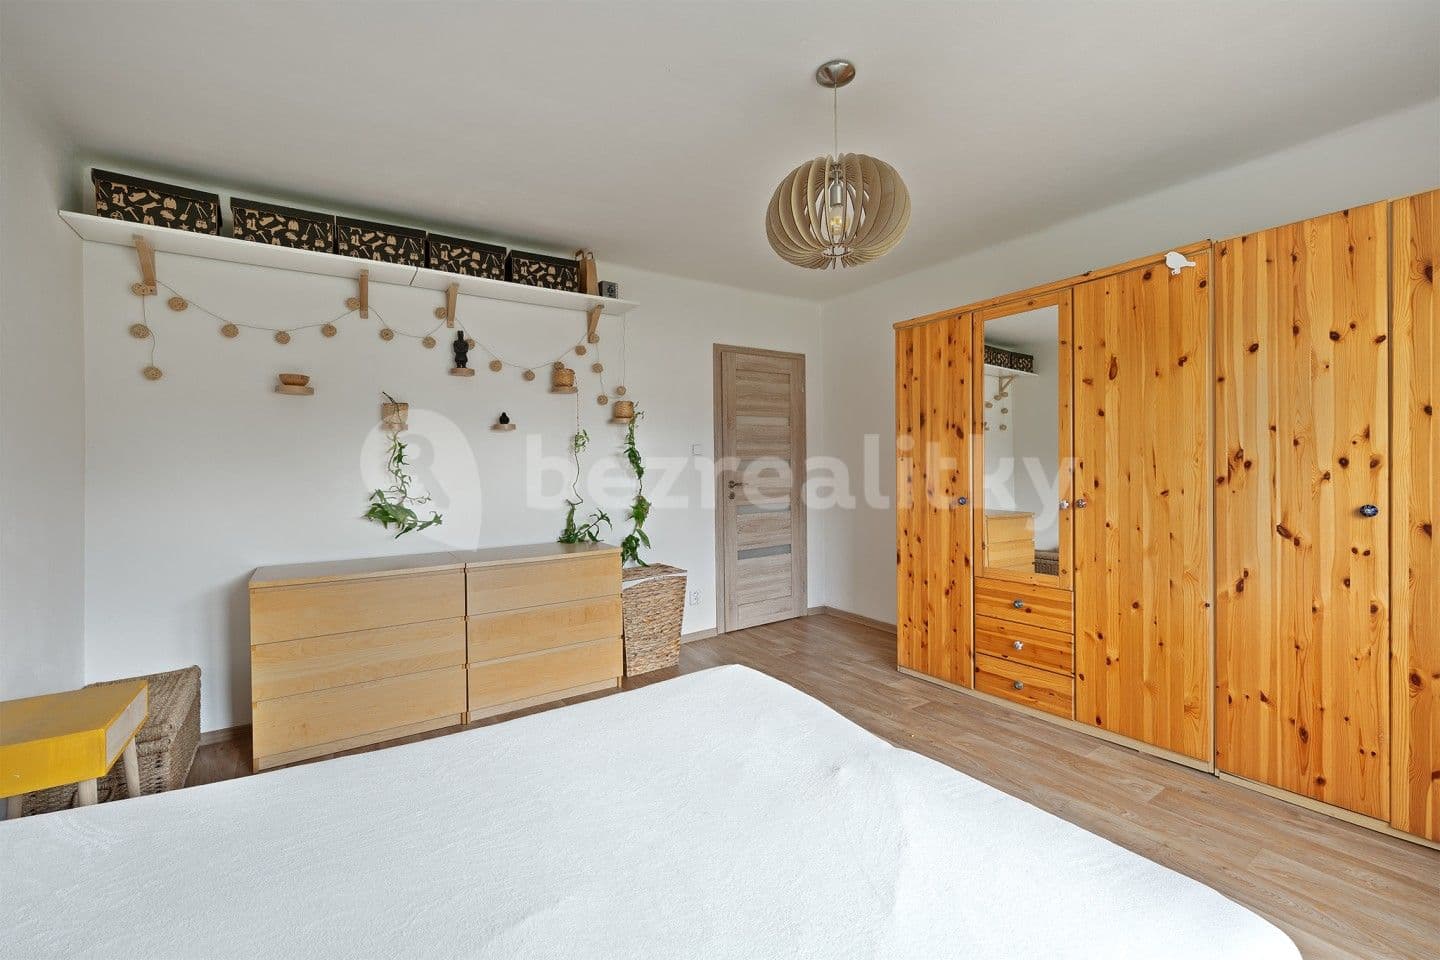 2 bedroom with open-plan kitchen flat for sale, 59 m², Povrly, Ústecký Region